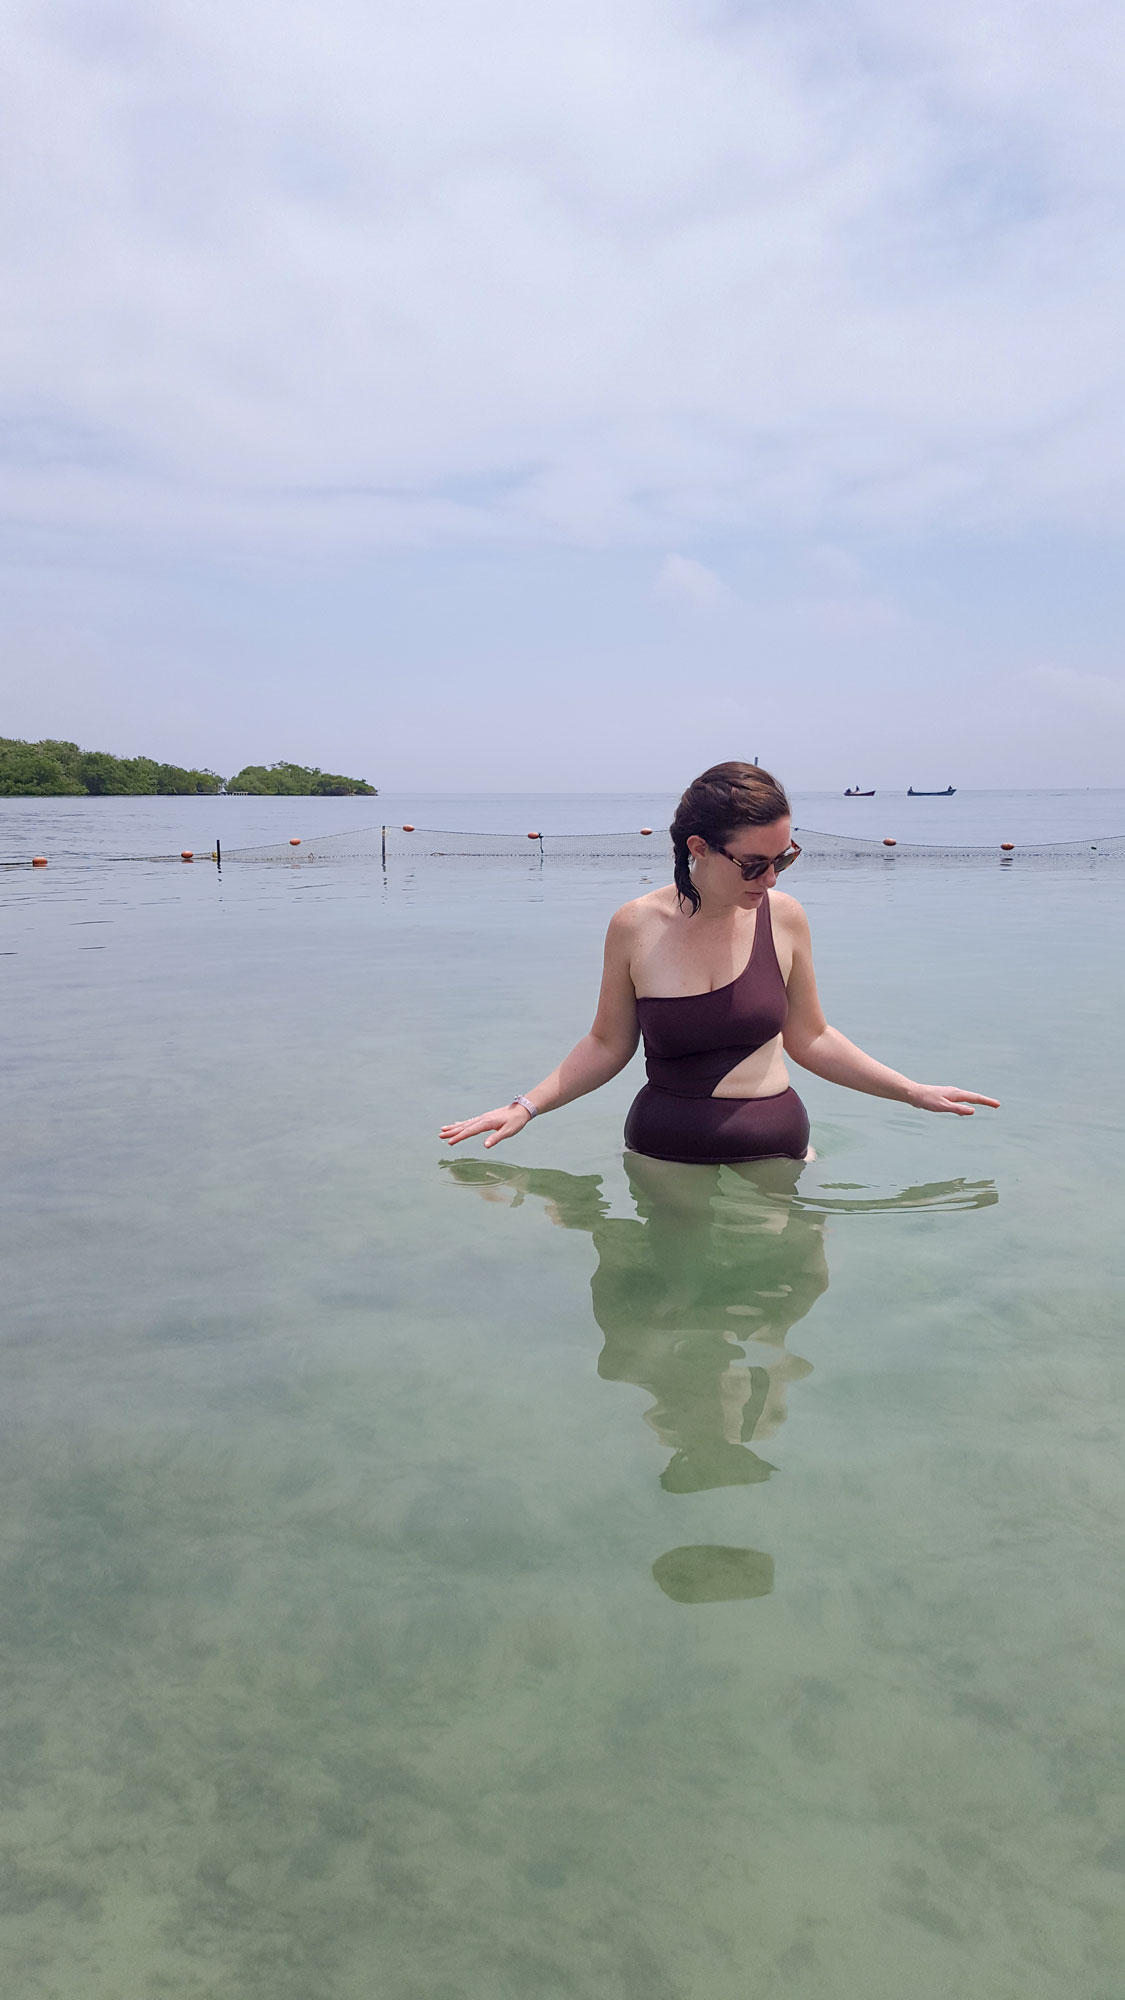 Krystal standing in the water at Islabela